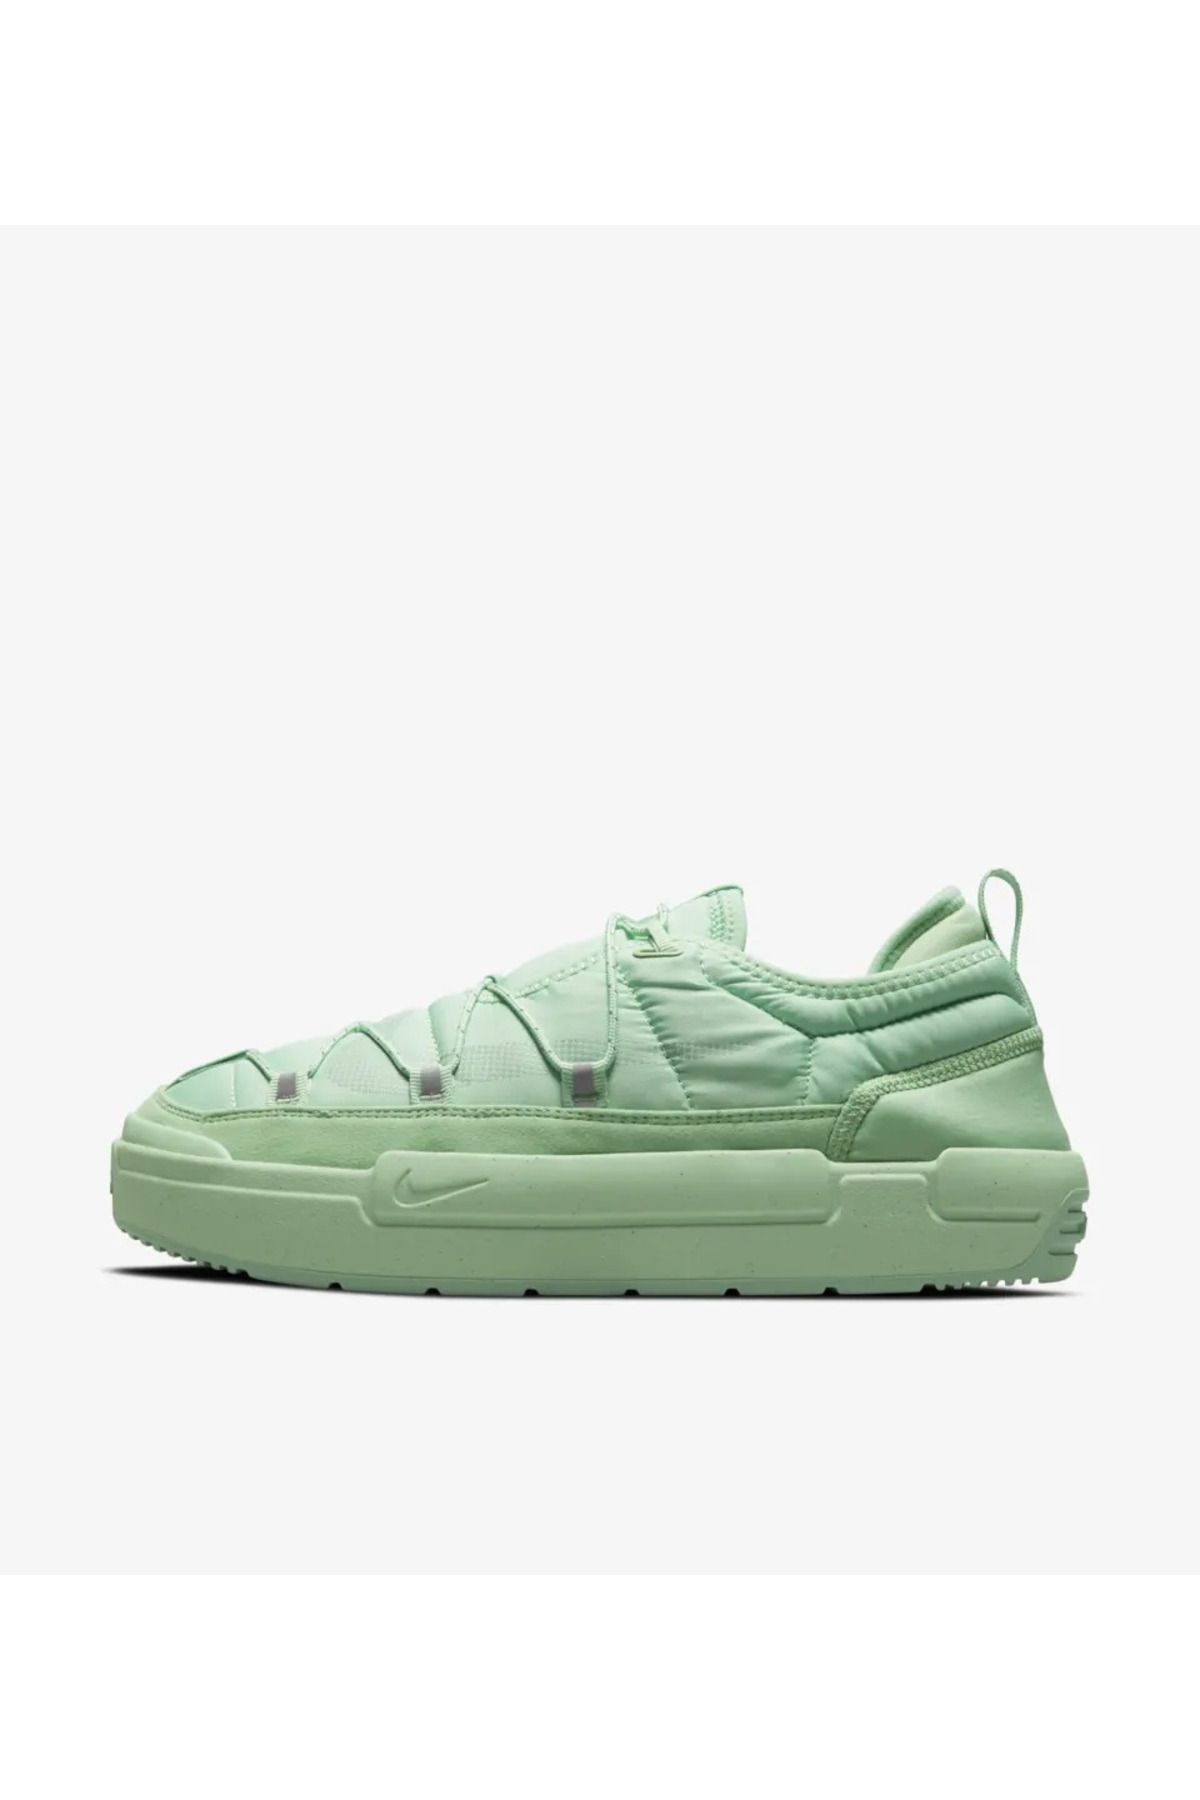 Nike Offline Pack Enamel Green